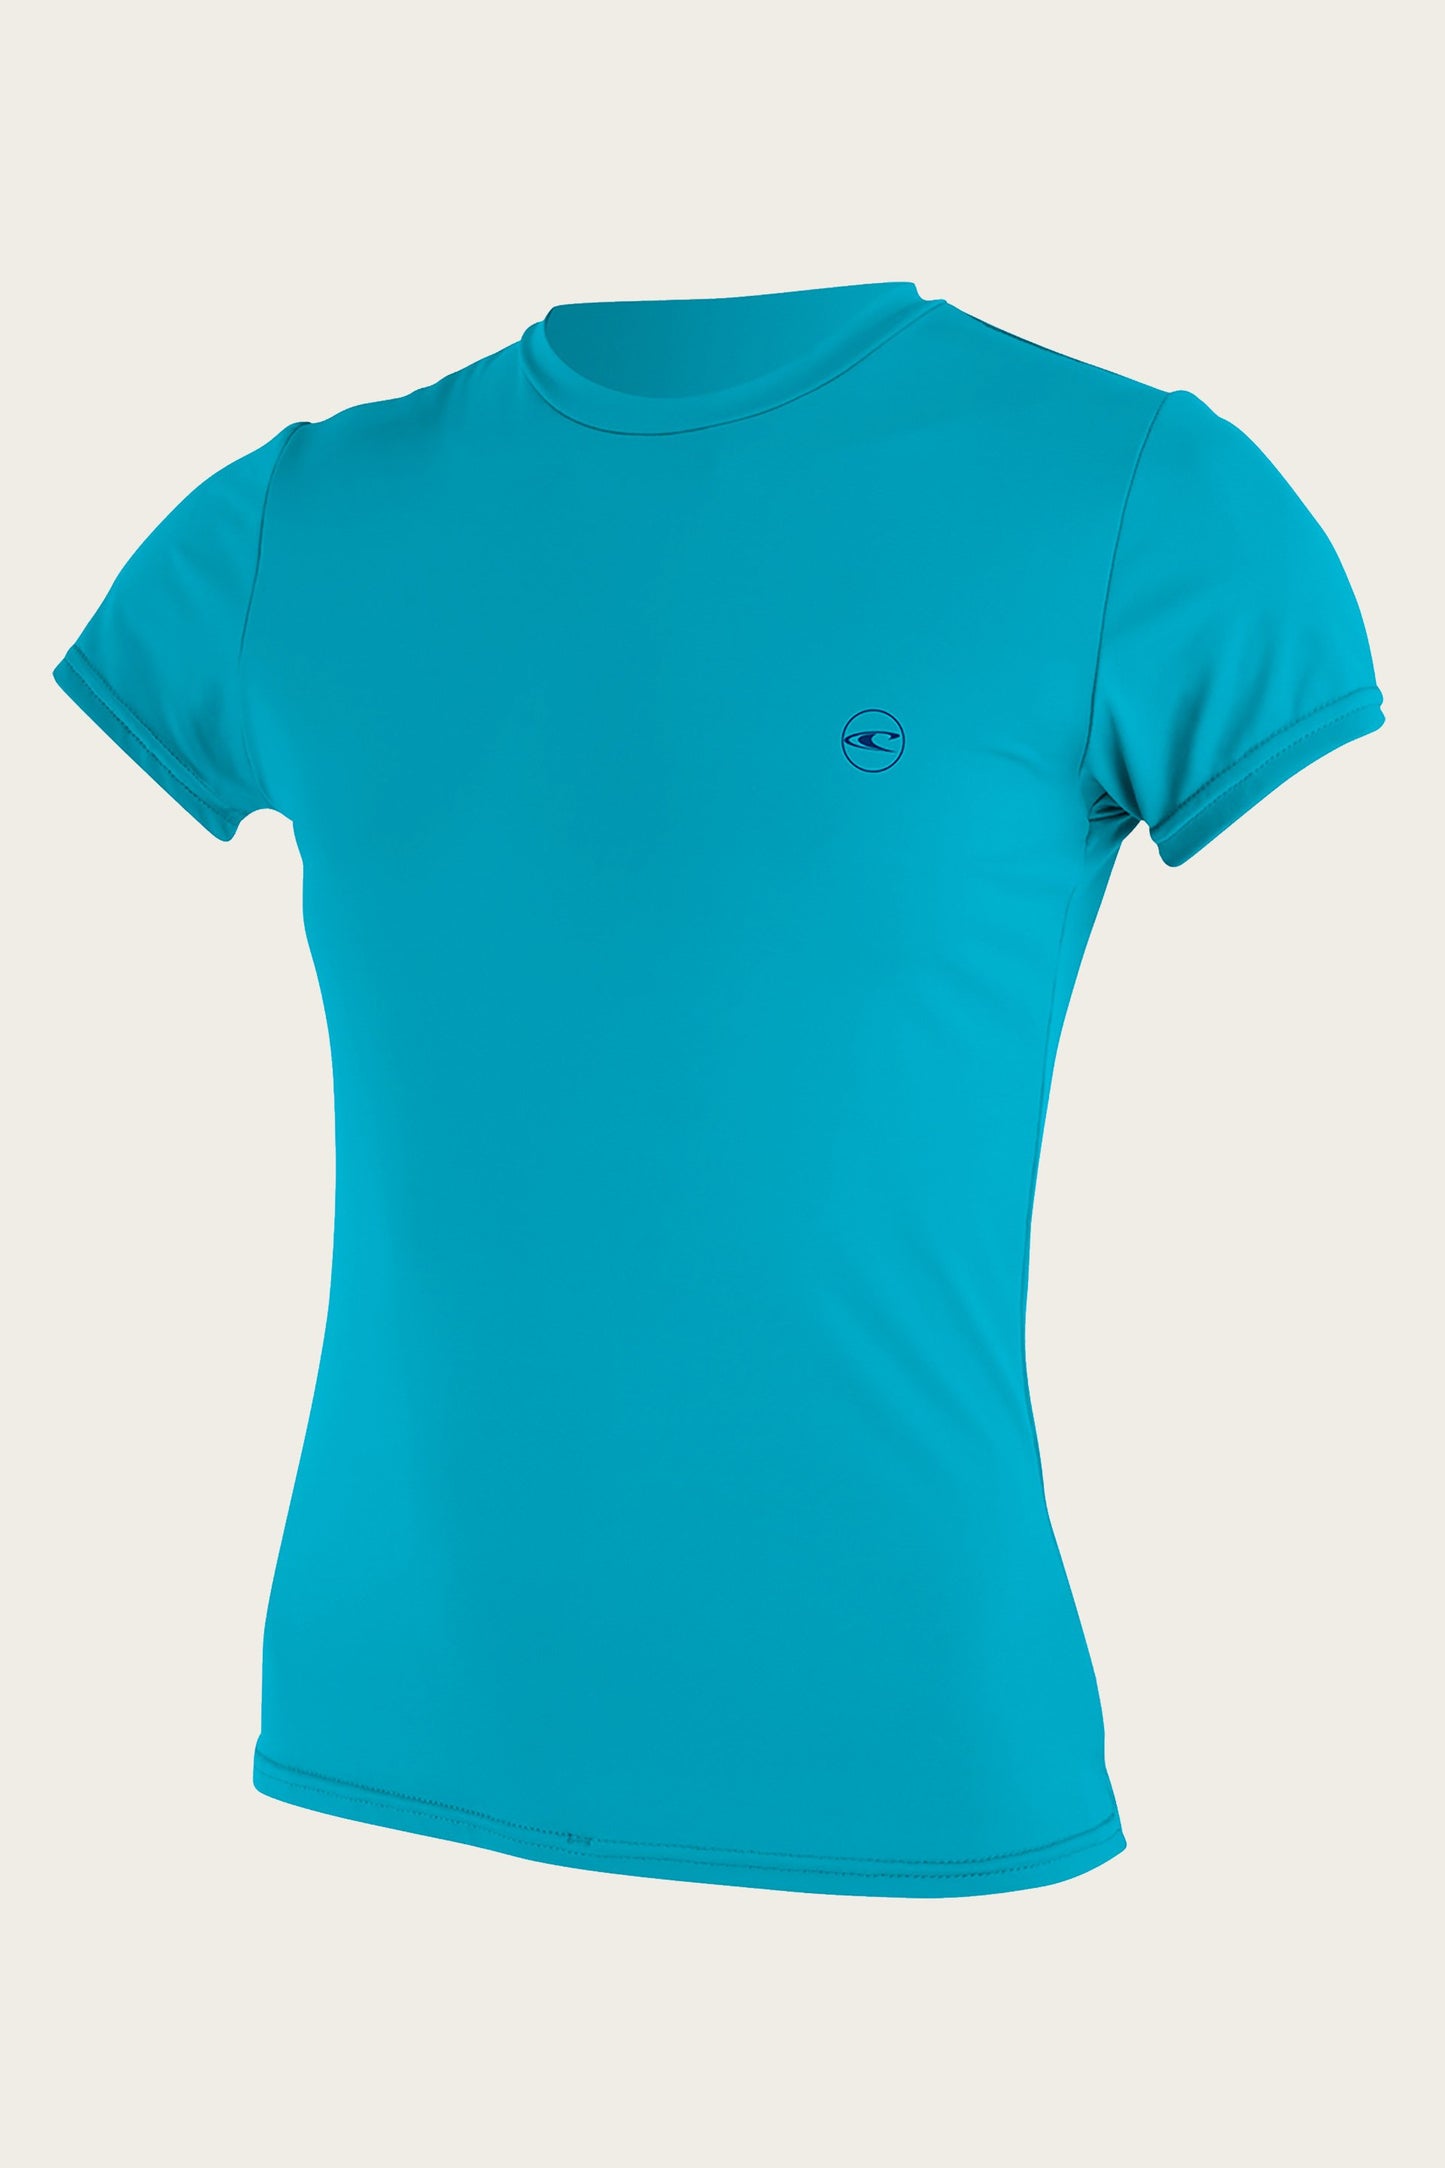 O'Neill 5089 Women's SS Basic UPF 30+ Sun Shirt - Turquoise Womens Rashguard